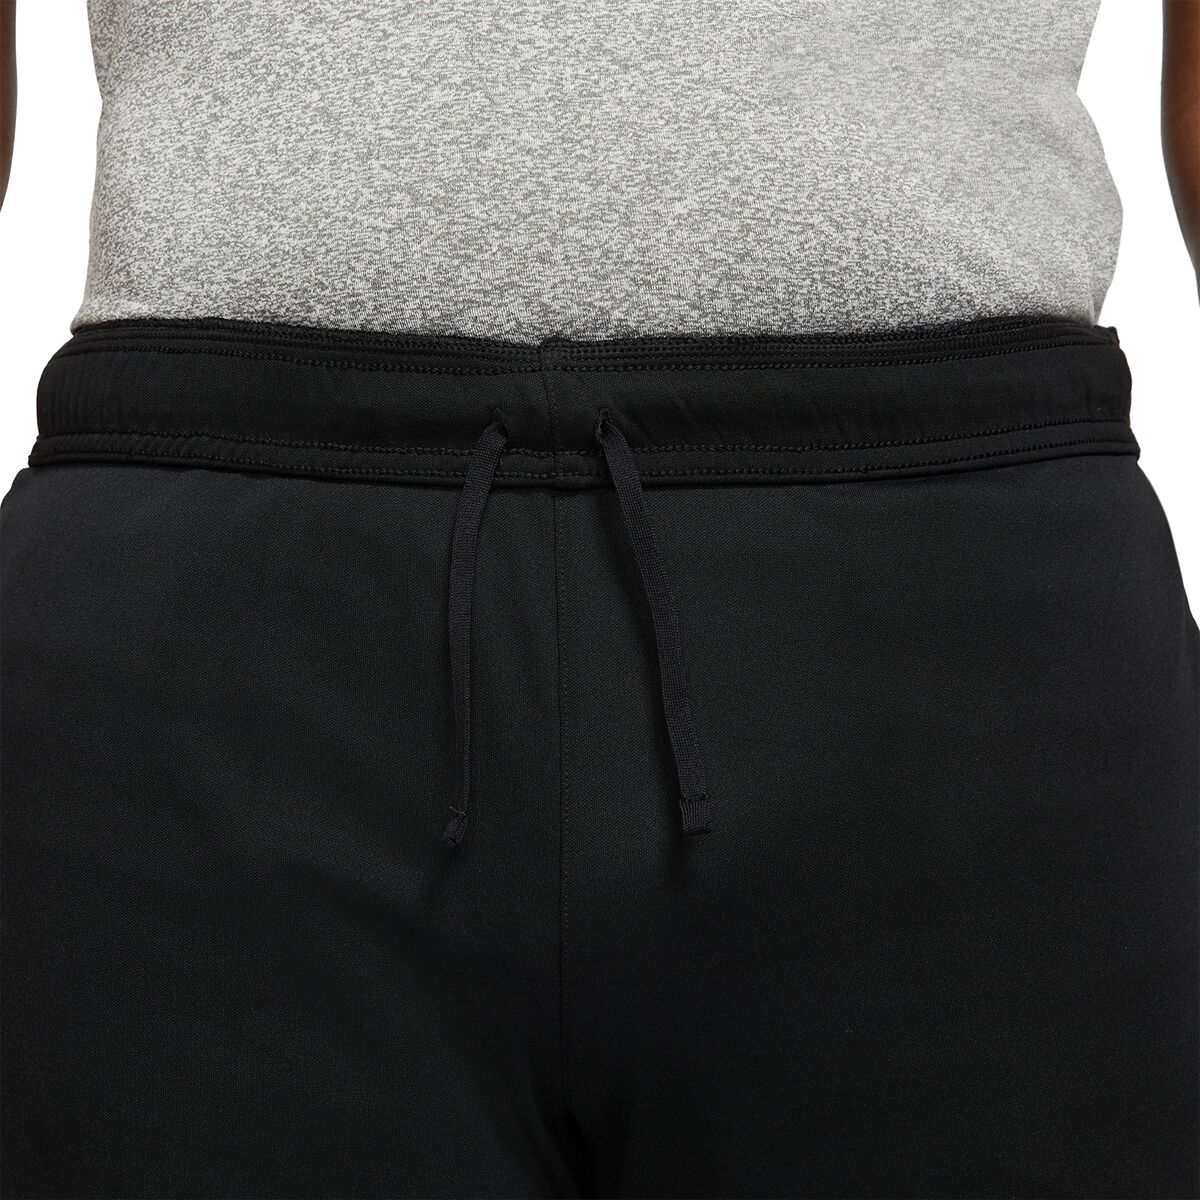 Nike Dri-Fit Challenger Knit Pant - Men's - Clothing